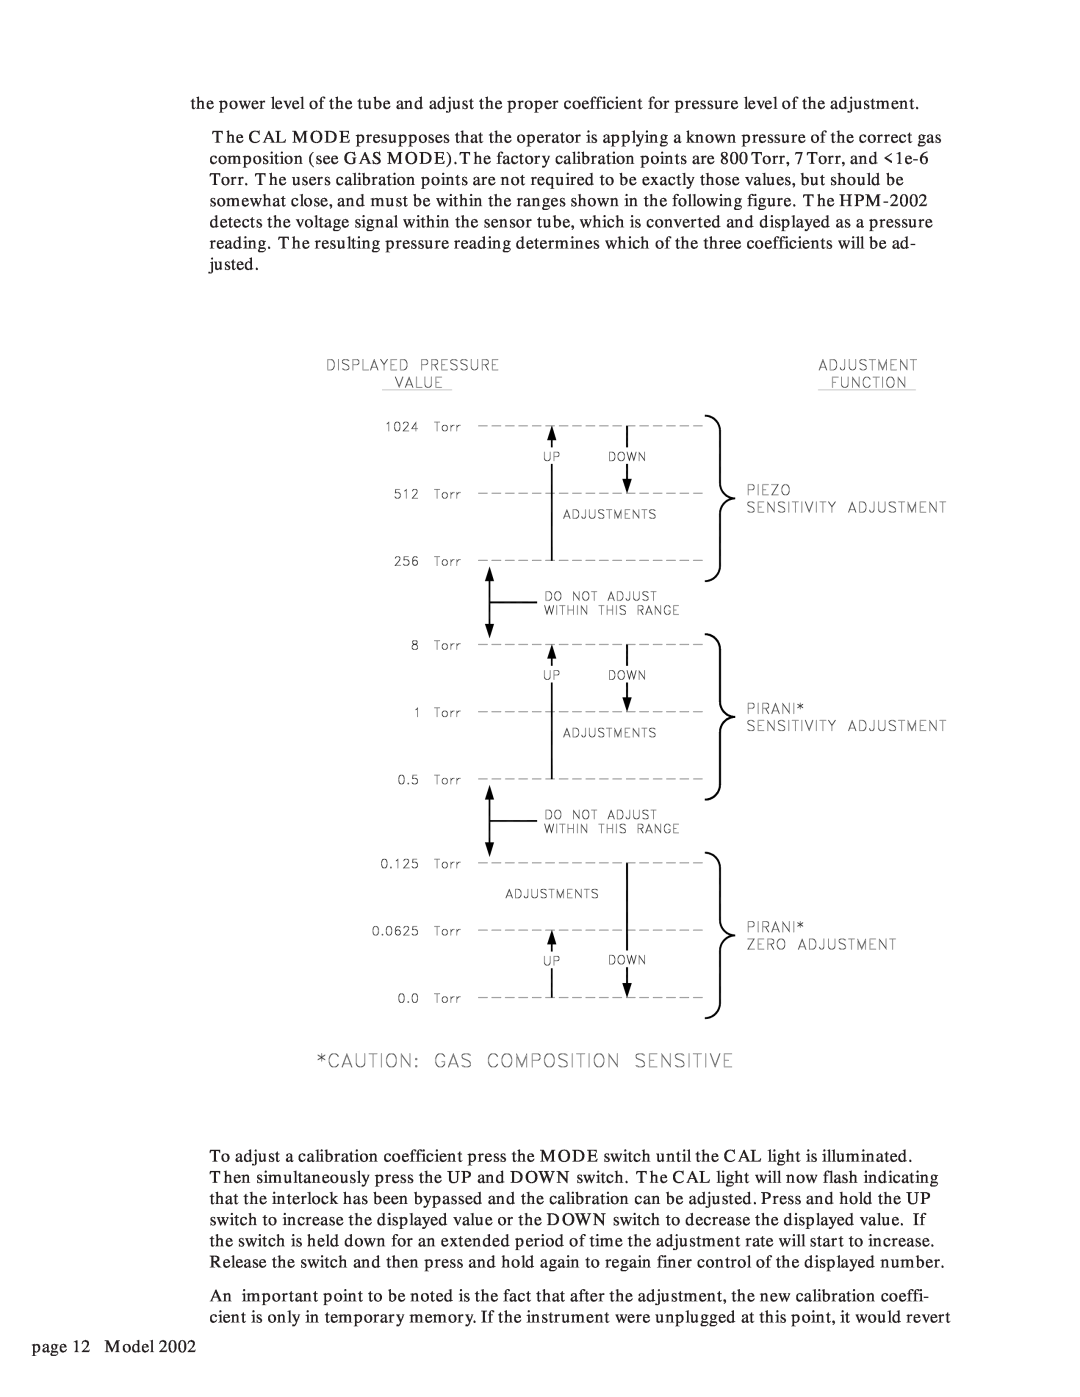 Teledyne 2002 instruction manual page 12 Model 